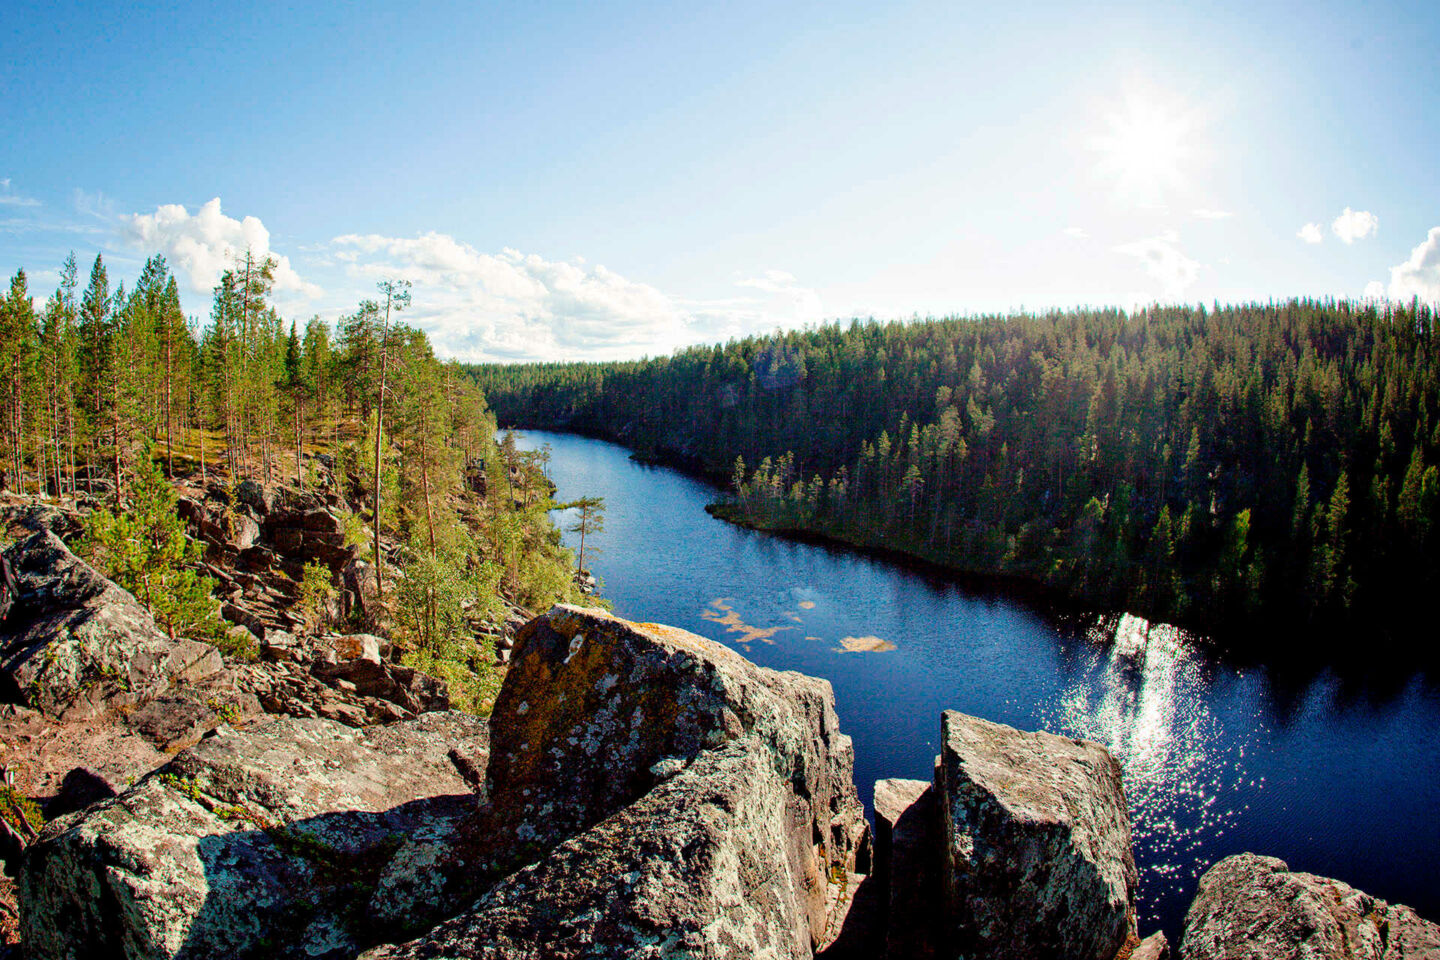 Summer at Hirviakuru Canyon in Sodankylä, a Finnish Lapland filming location